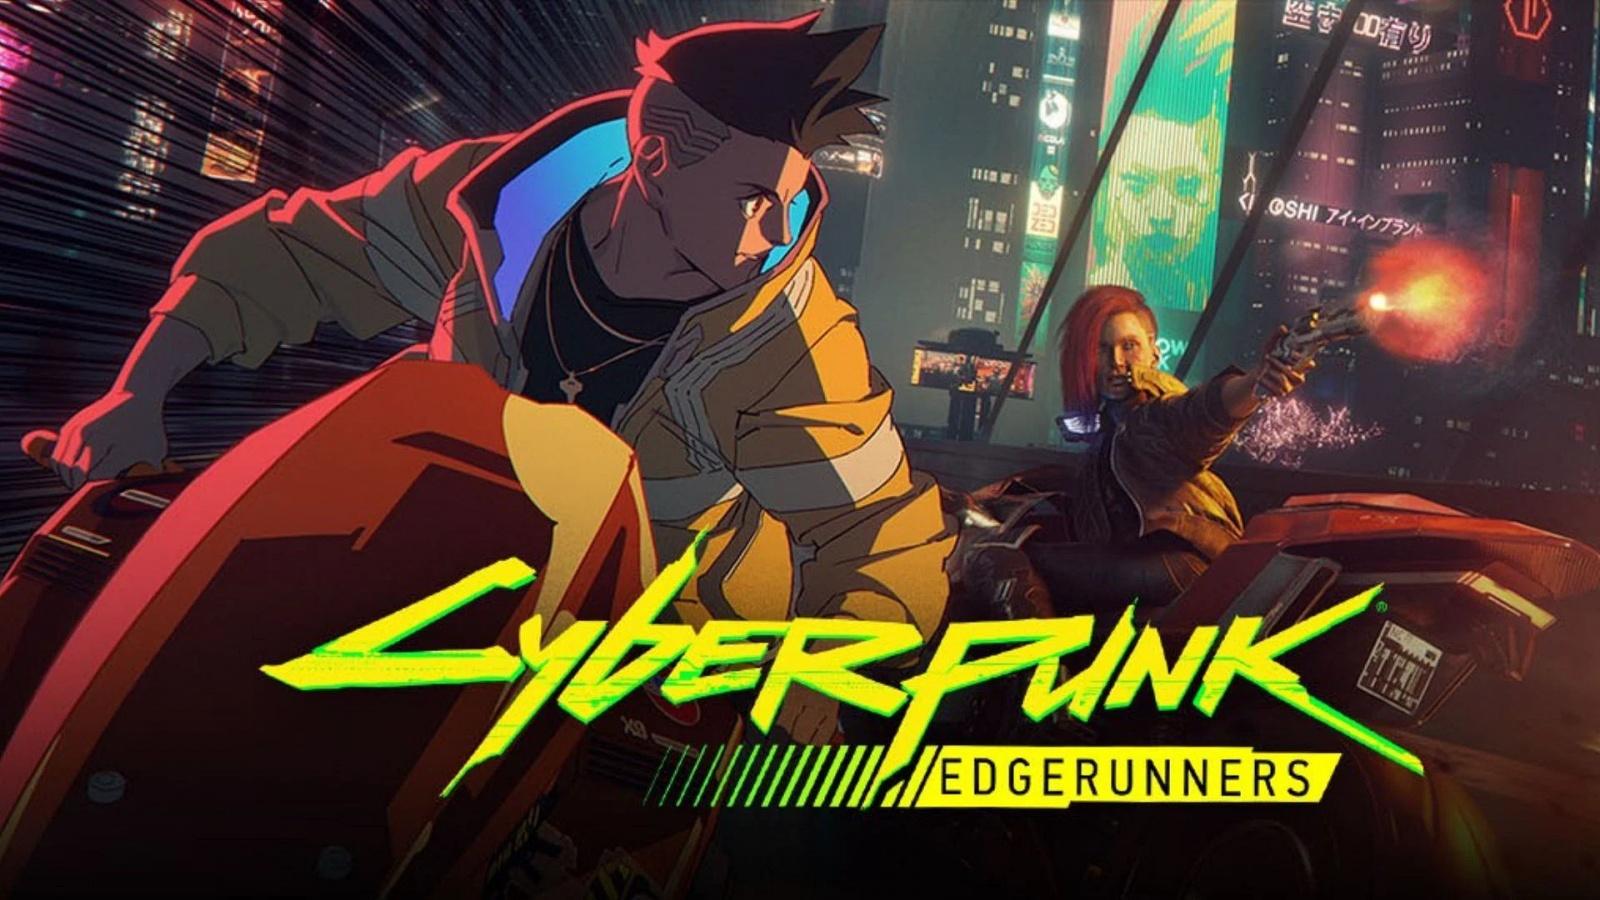 Will there be a Cyberpunk: Edgerunners season 2?